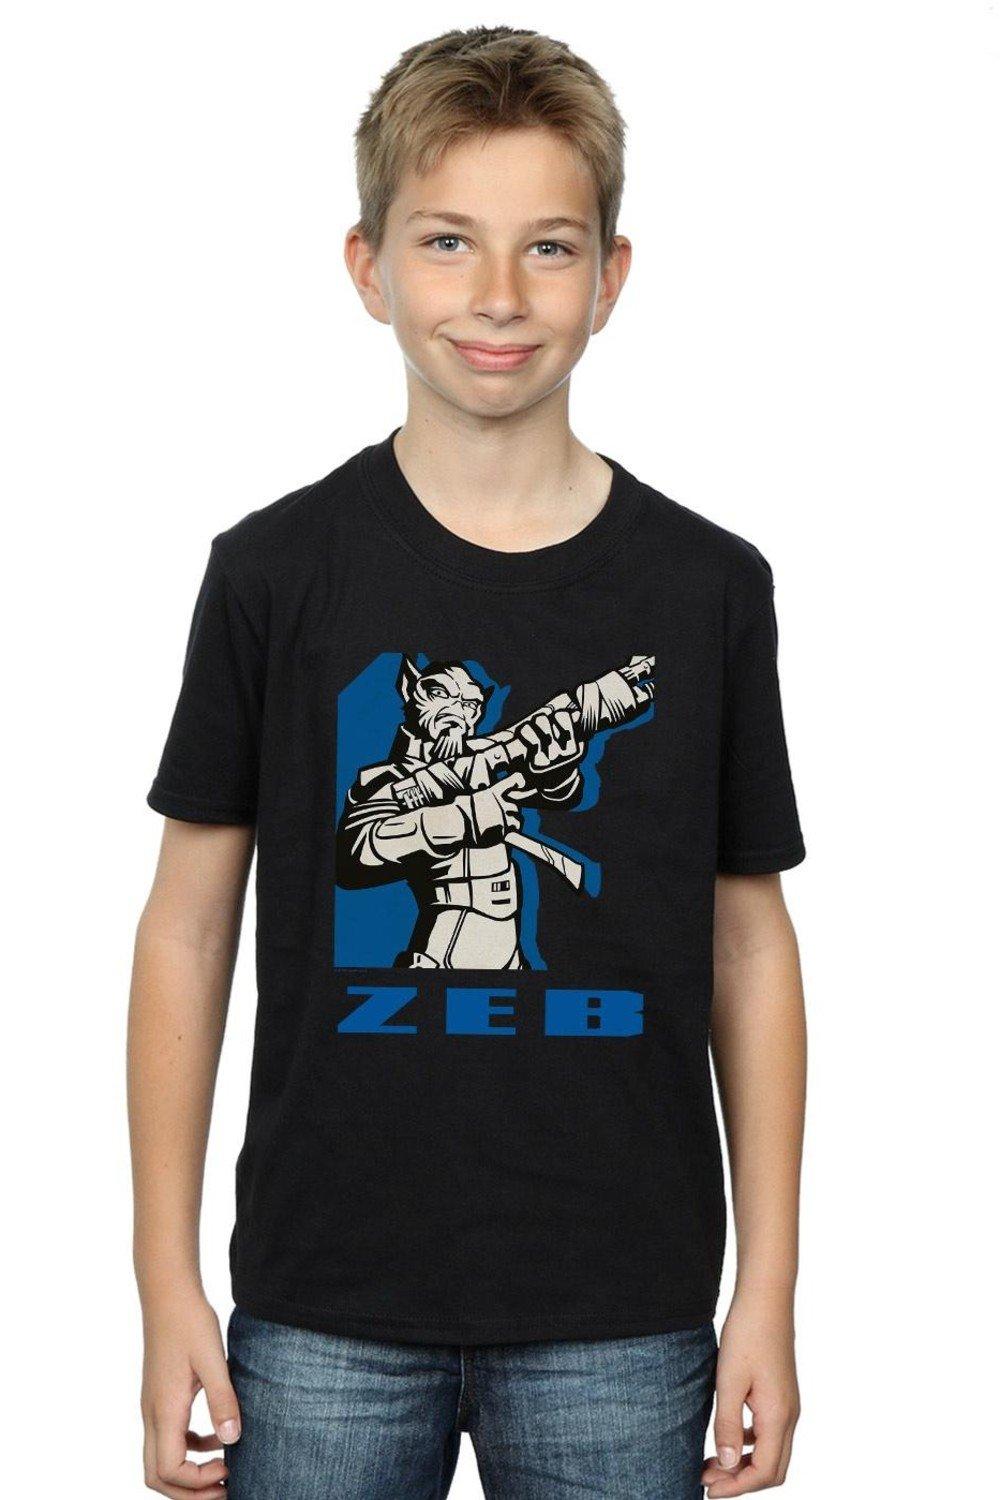 Rebels Zeb T-Shirt